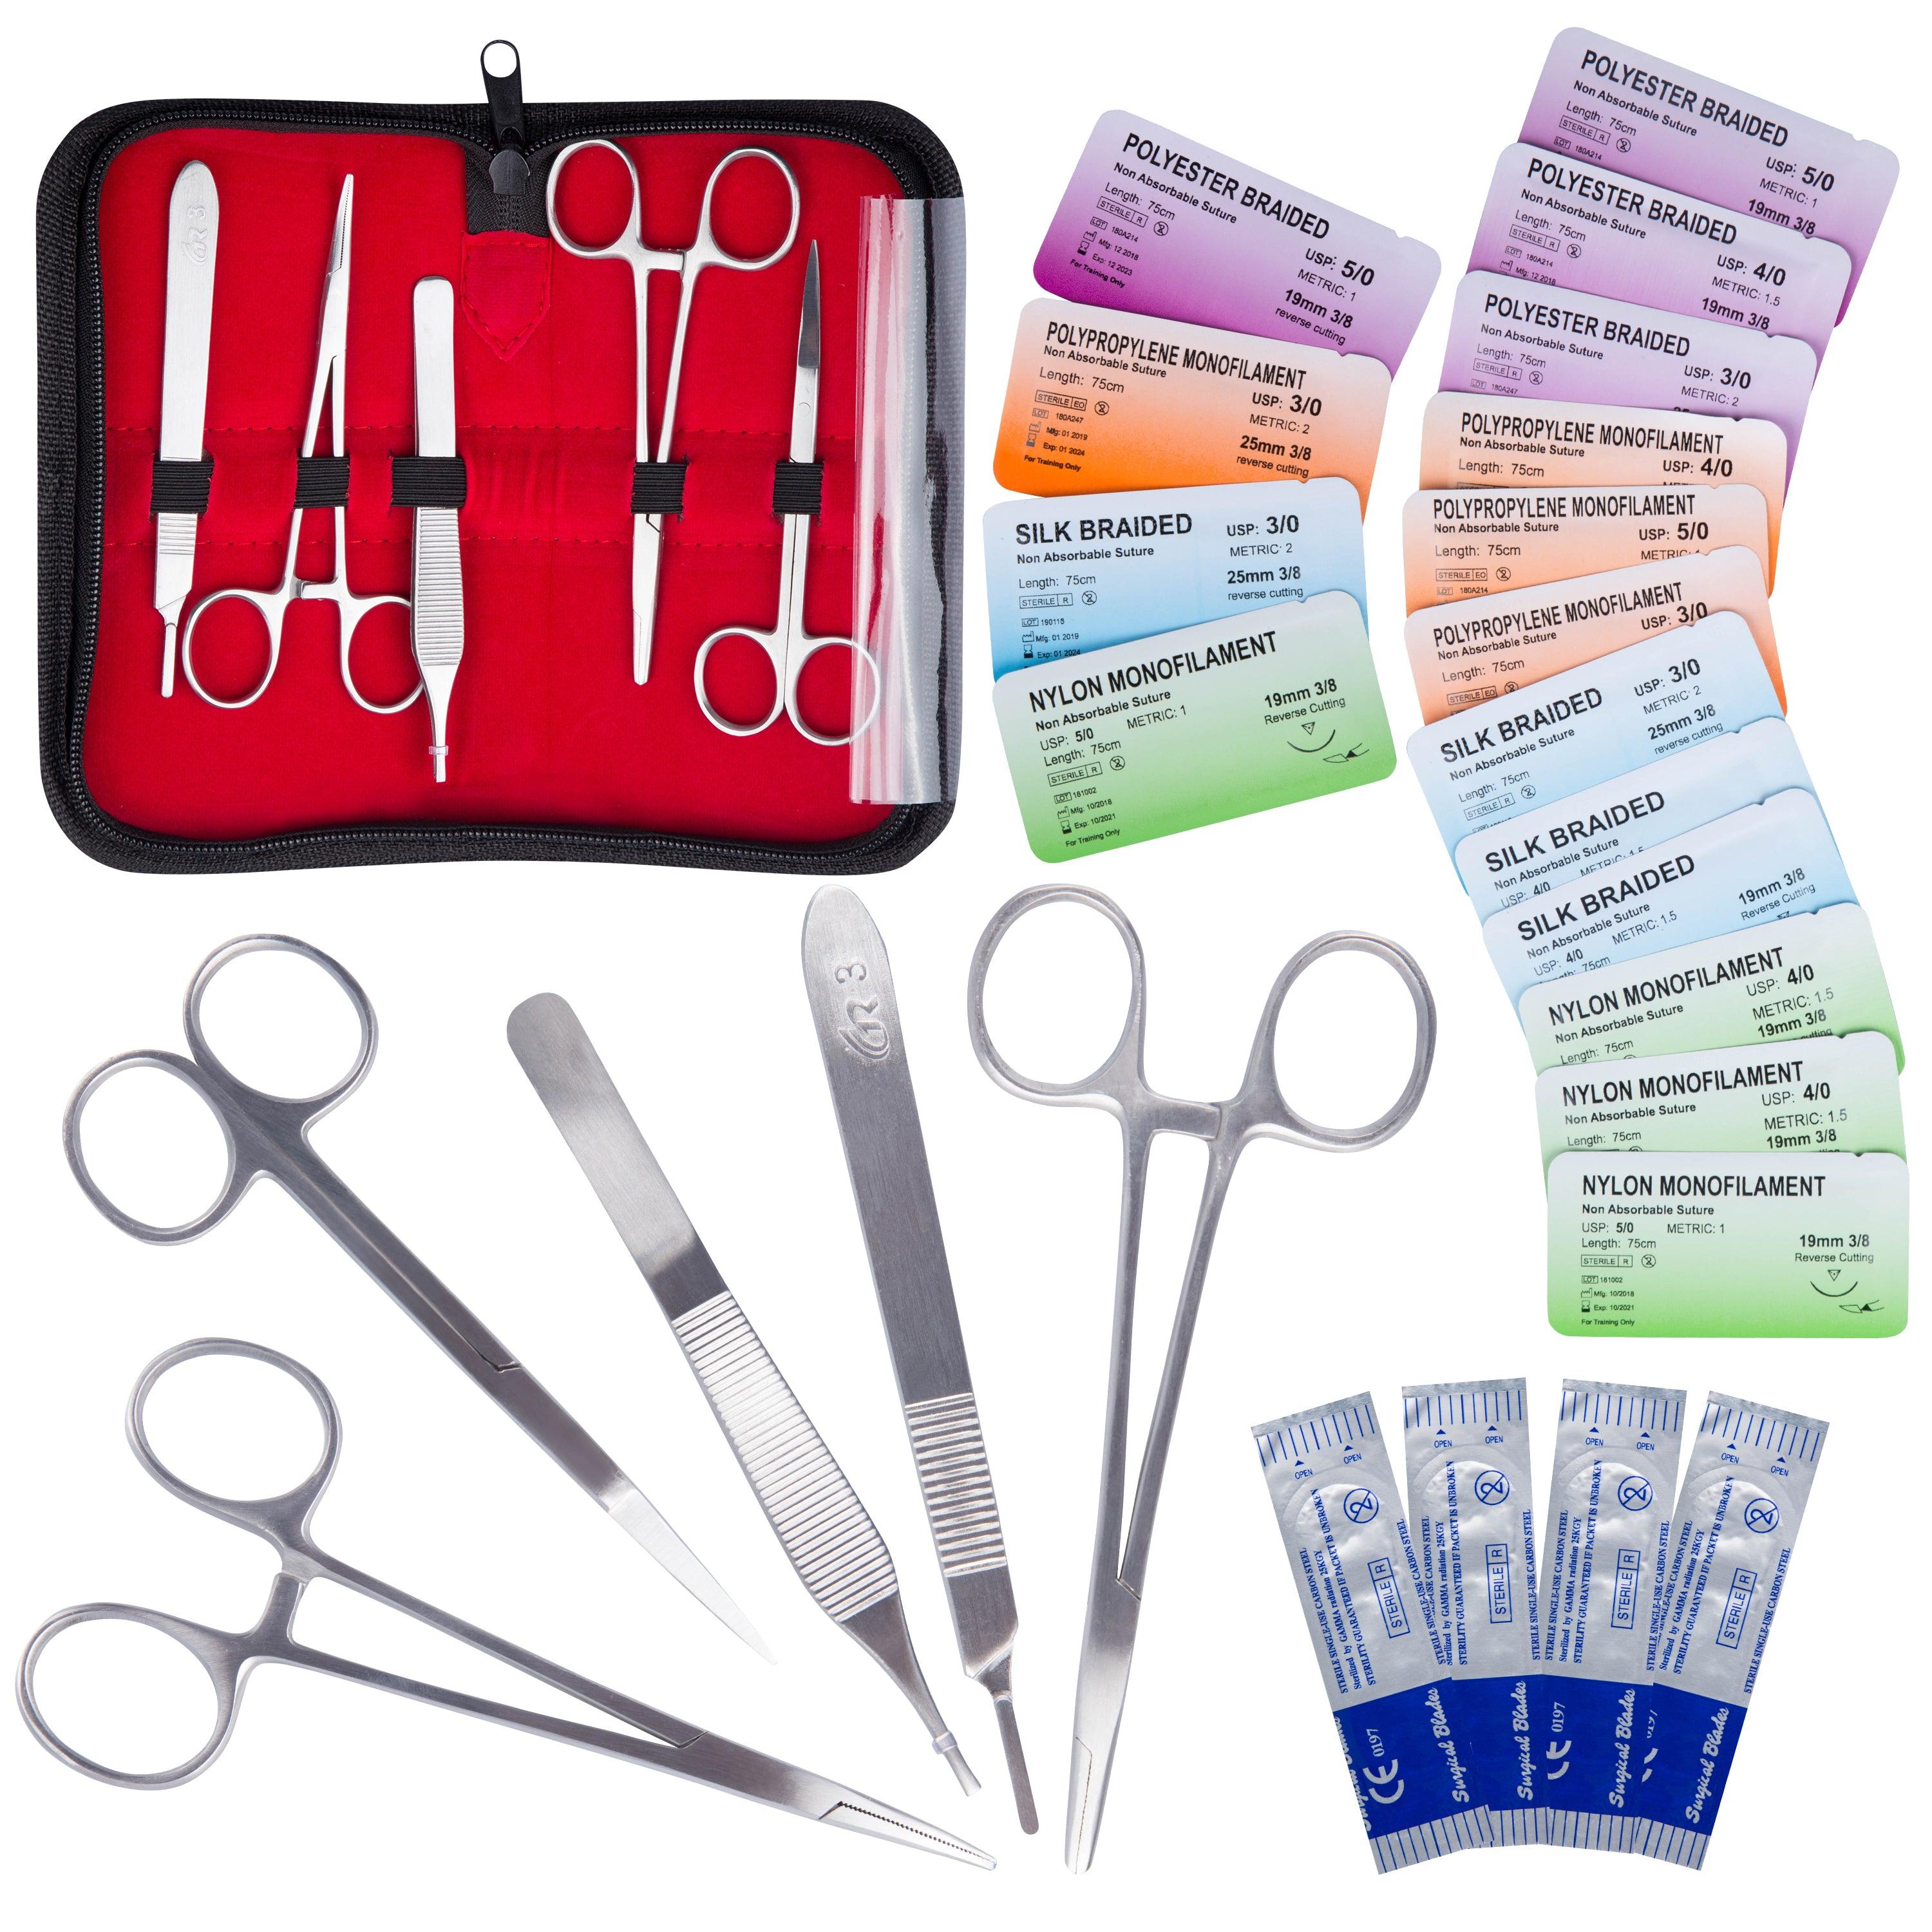 Suture Practice Kit With Tools & Storage Case – MedicPad